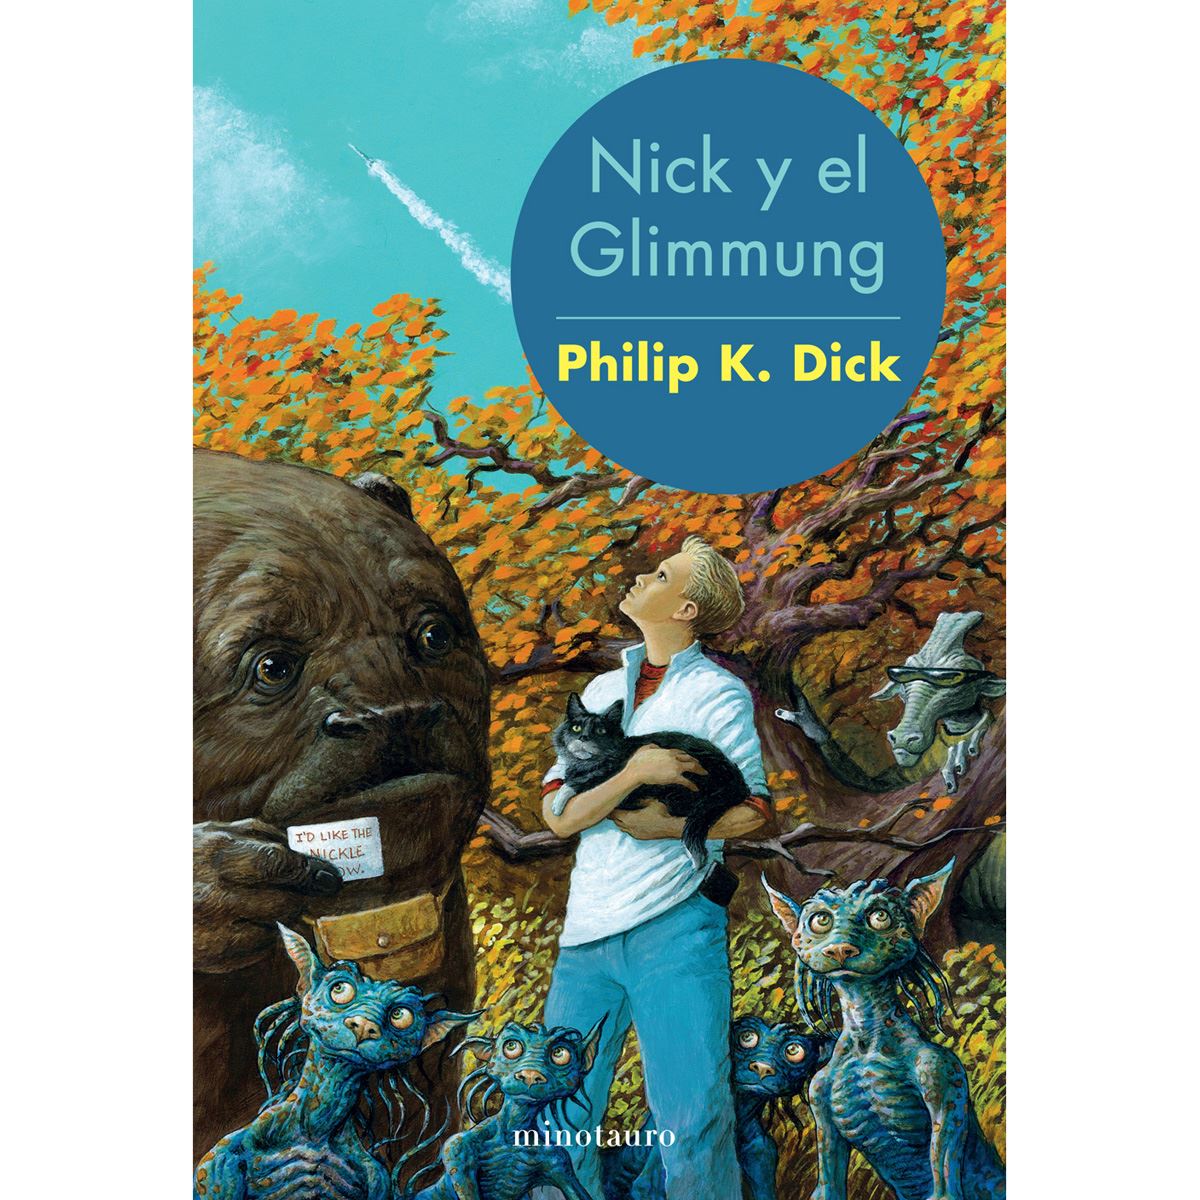 Nick y el Glimmung